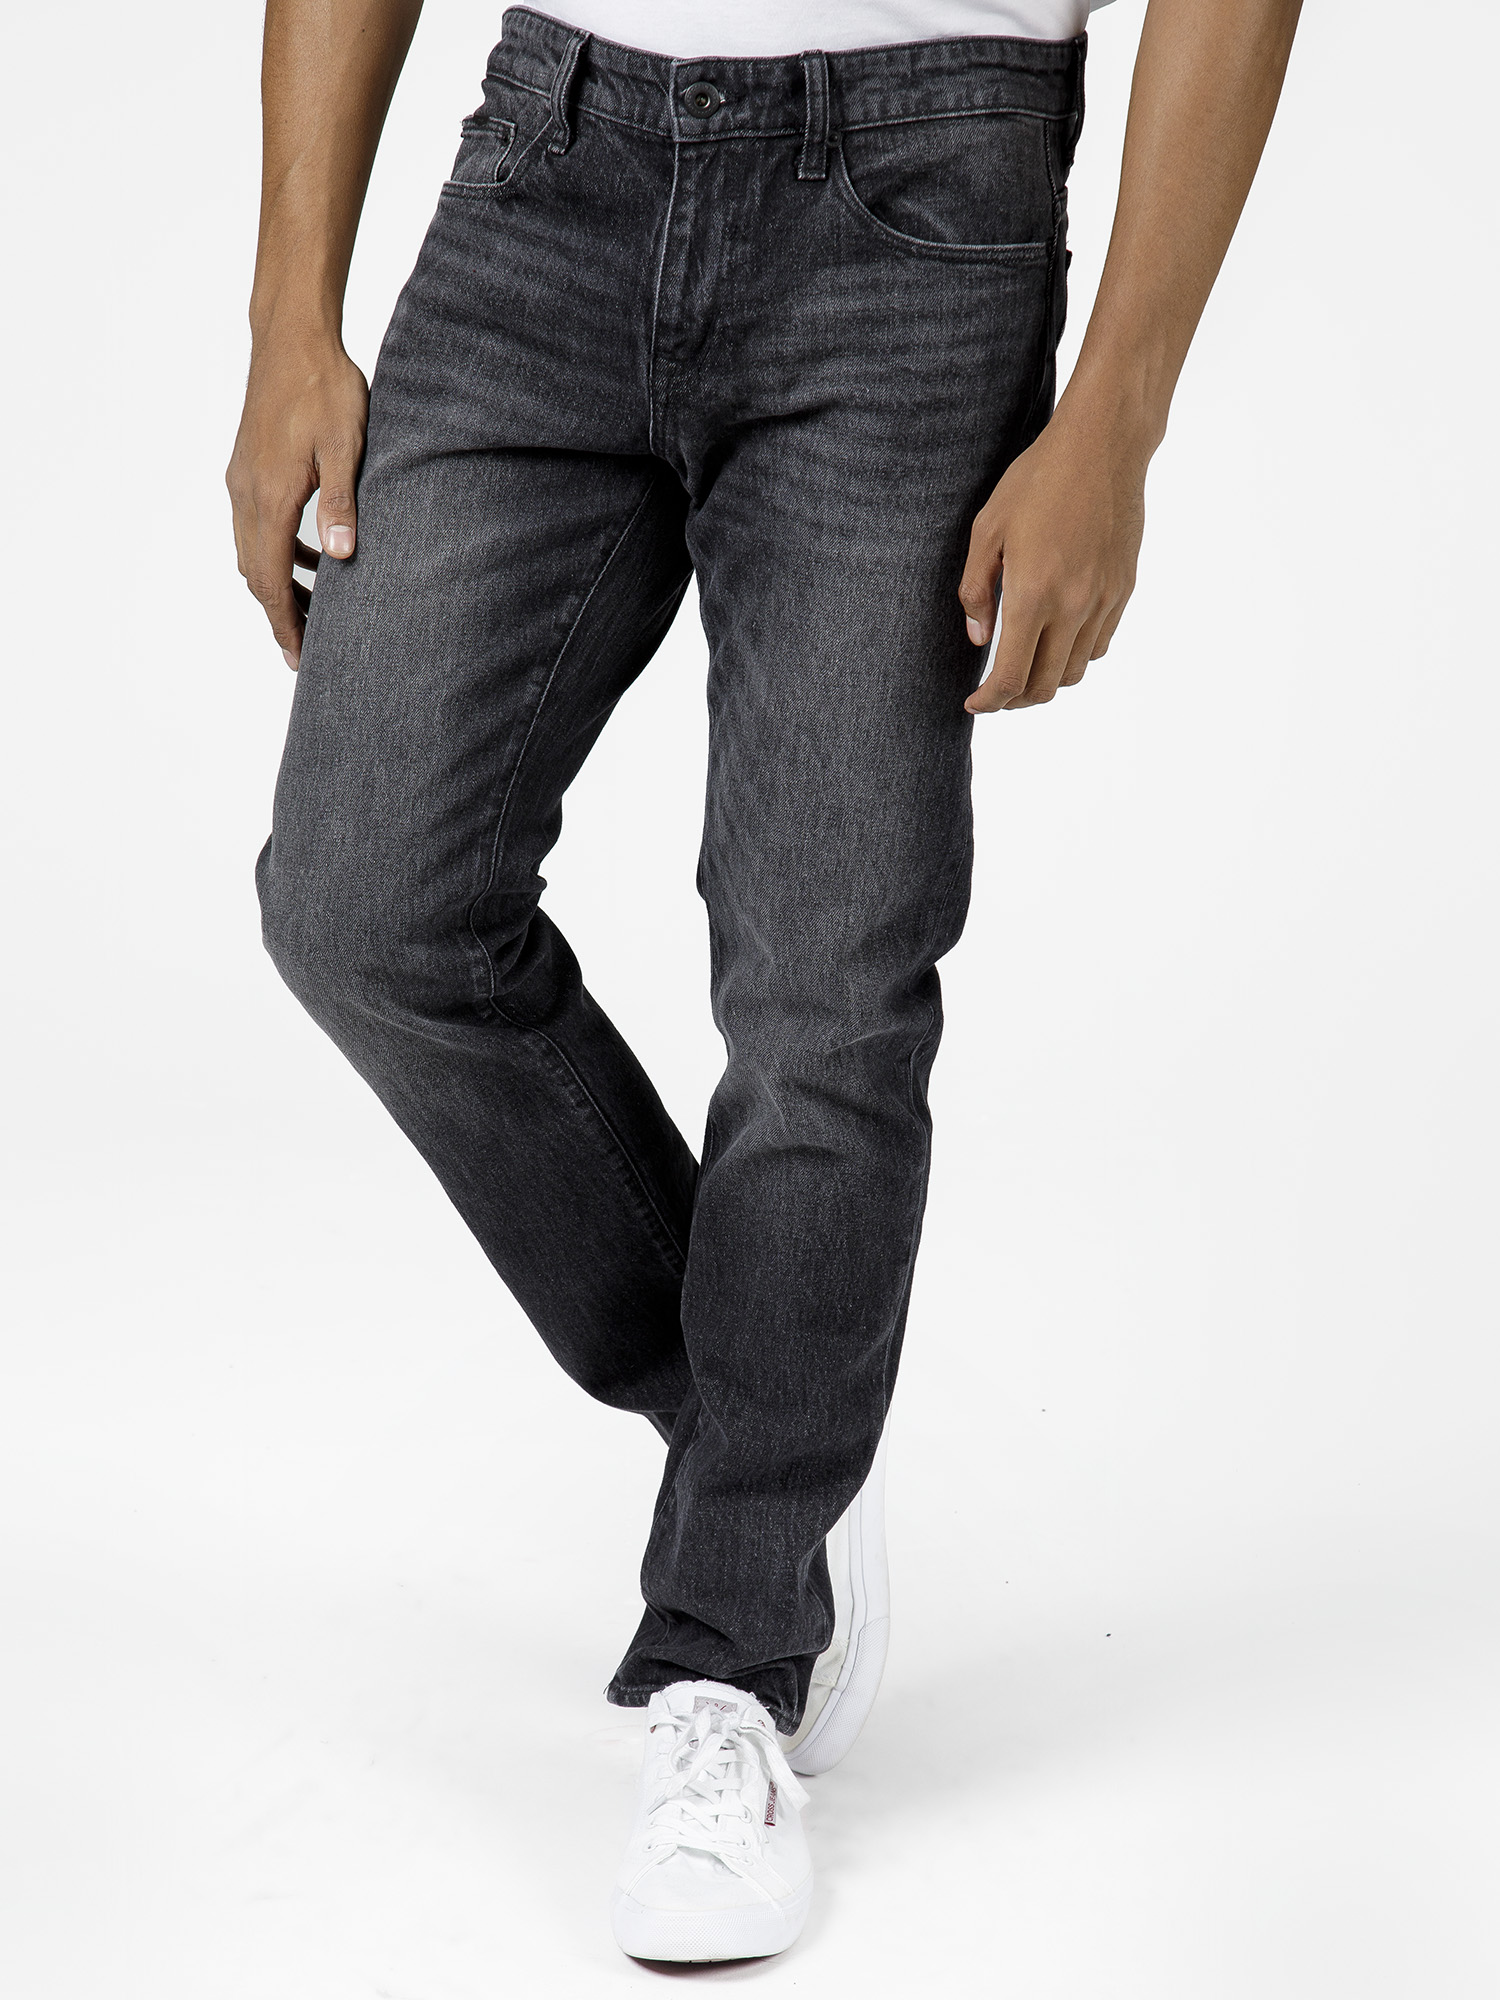 Джинсы Cross Jeans для мужчин, F 152-110, размер 34-30, чёрные